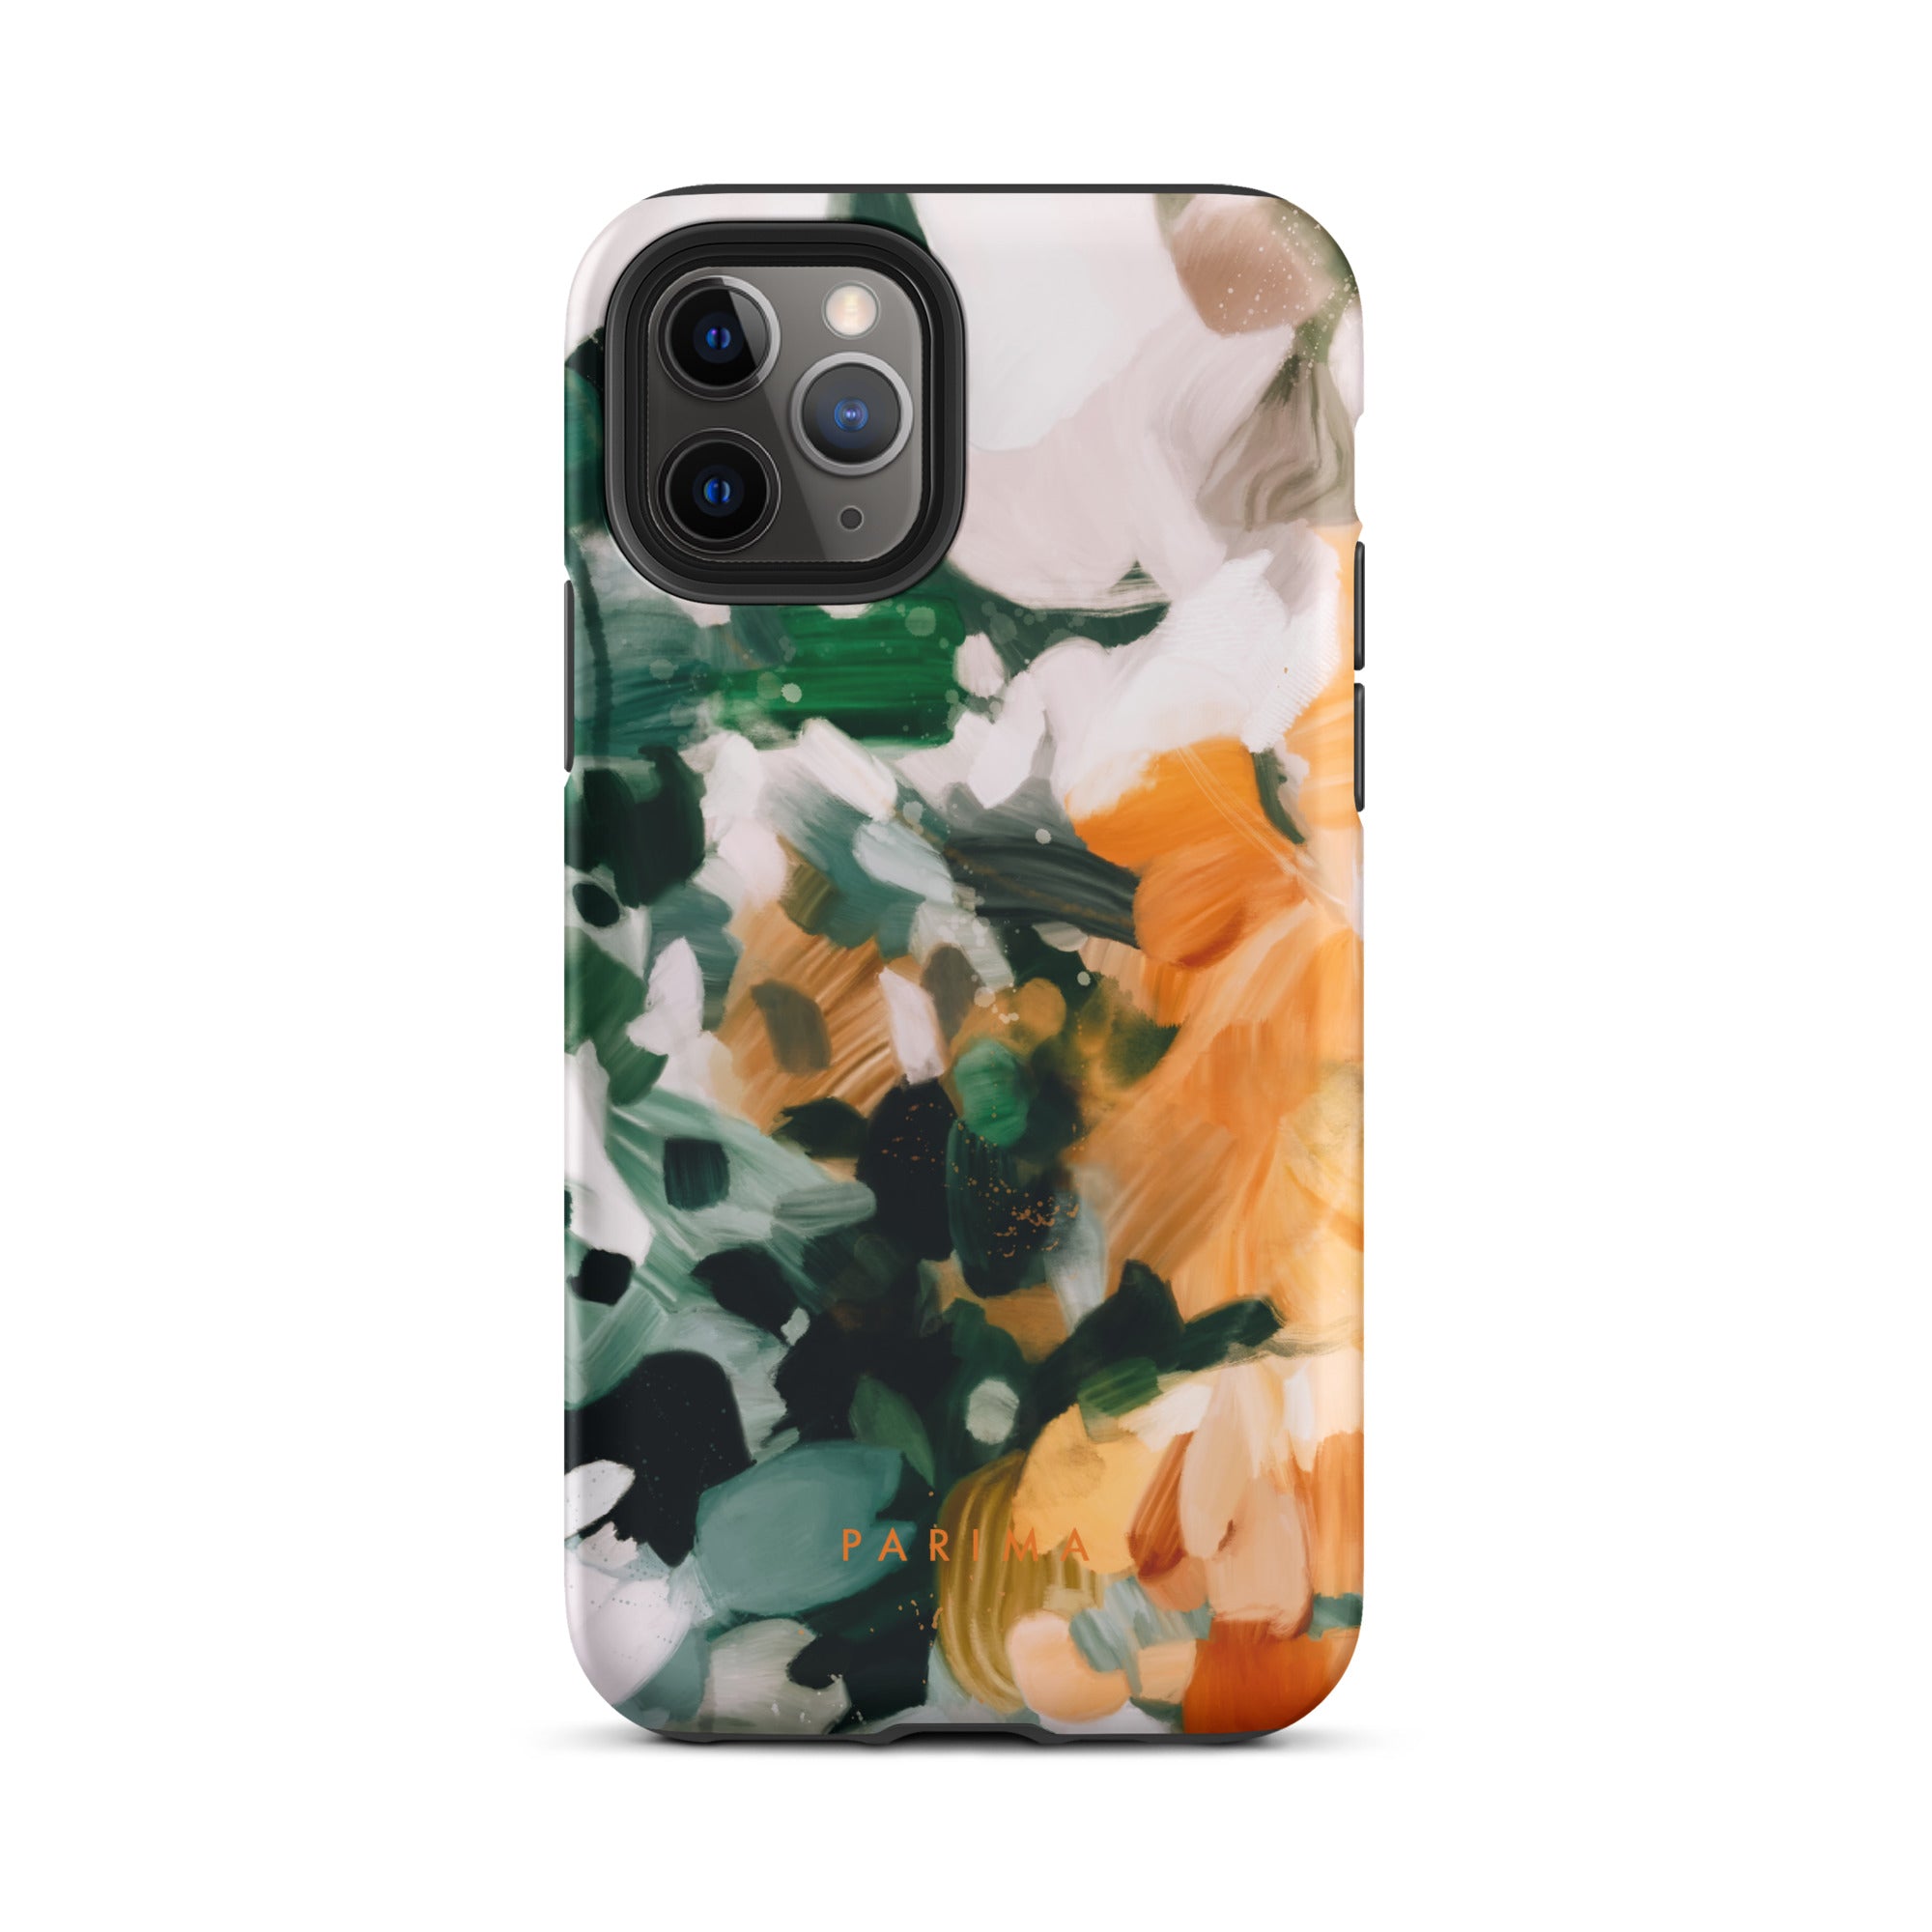 Aspen, green and orange abstract art - iPhone 11 Pro tough case by Parima Studio